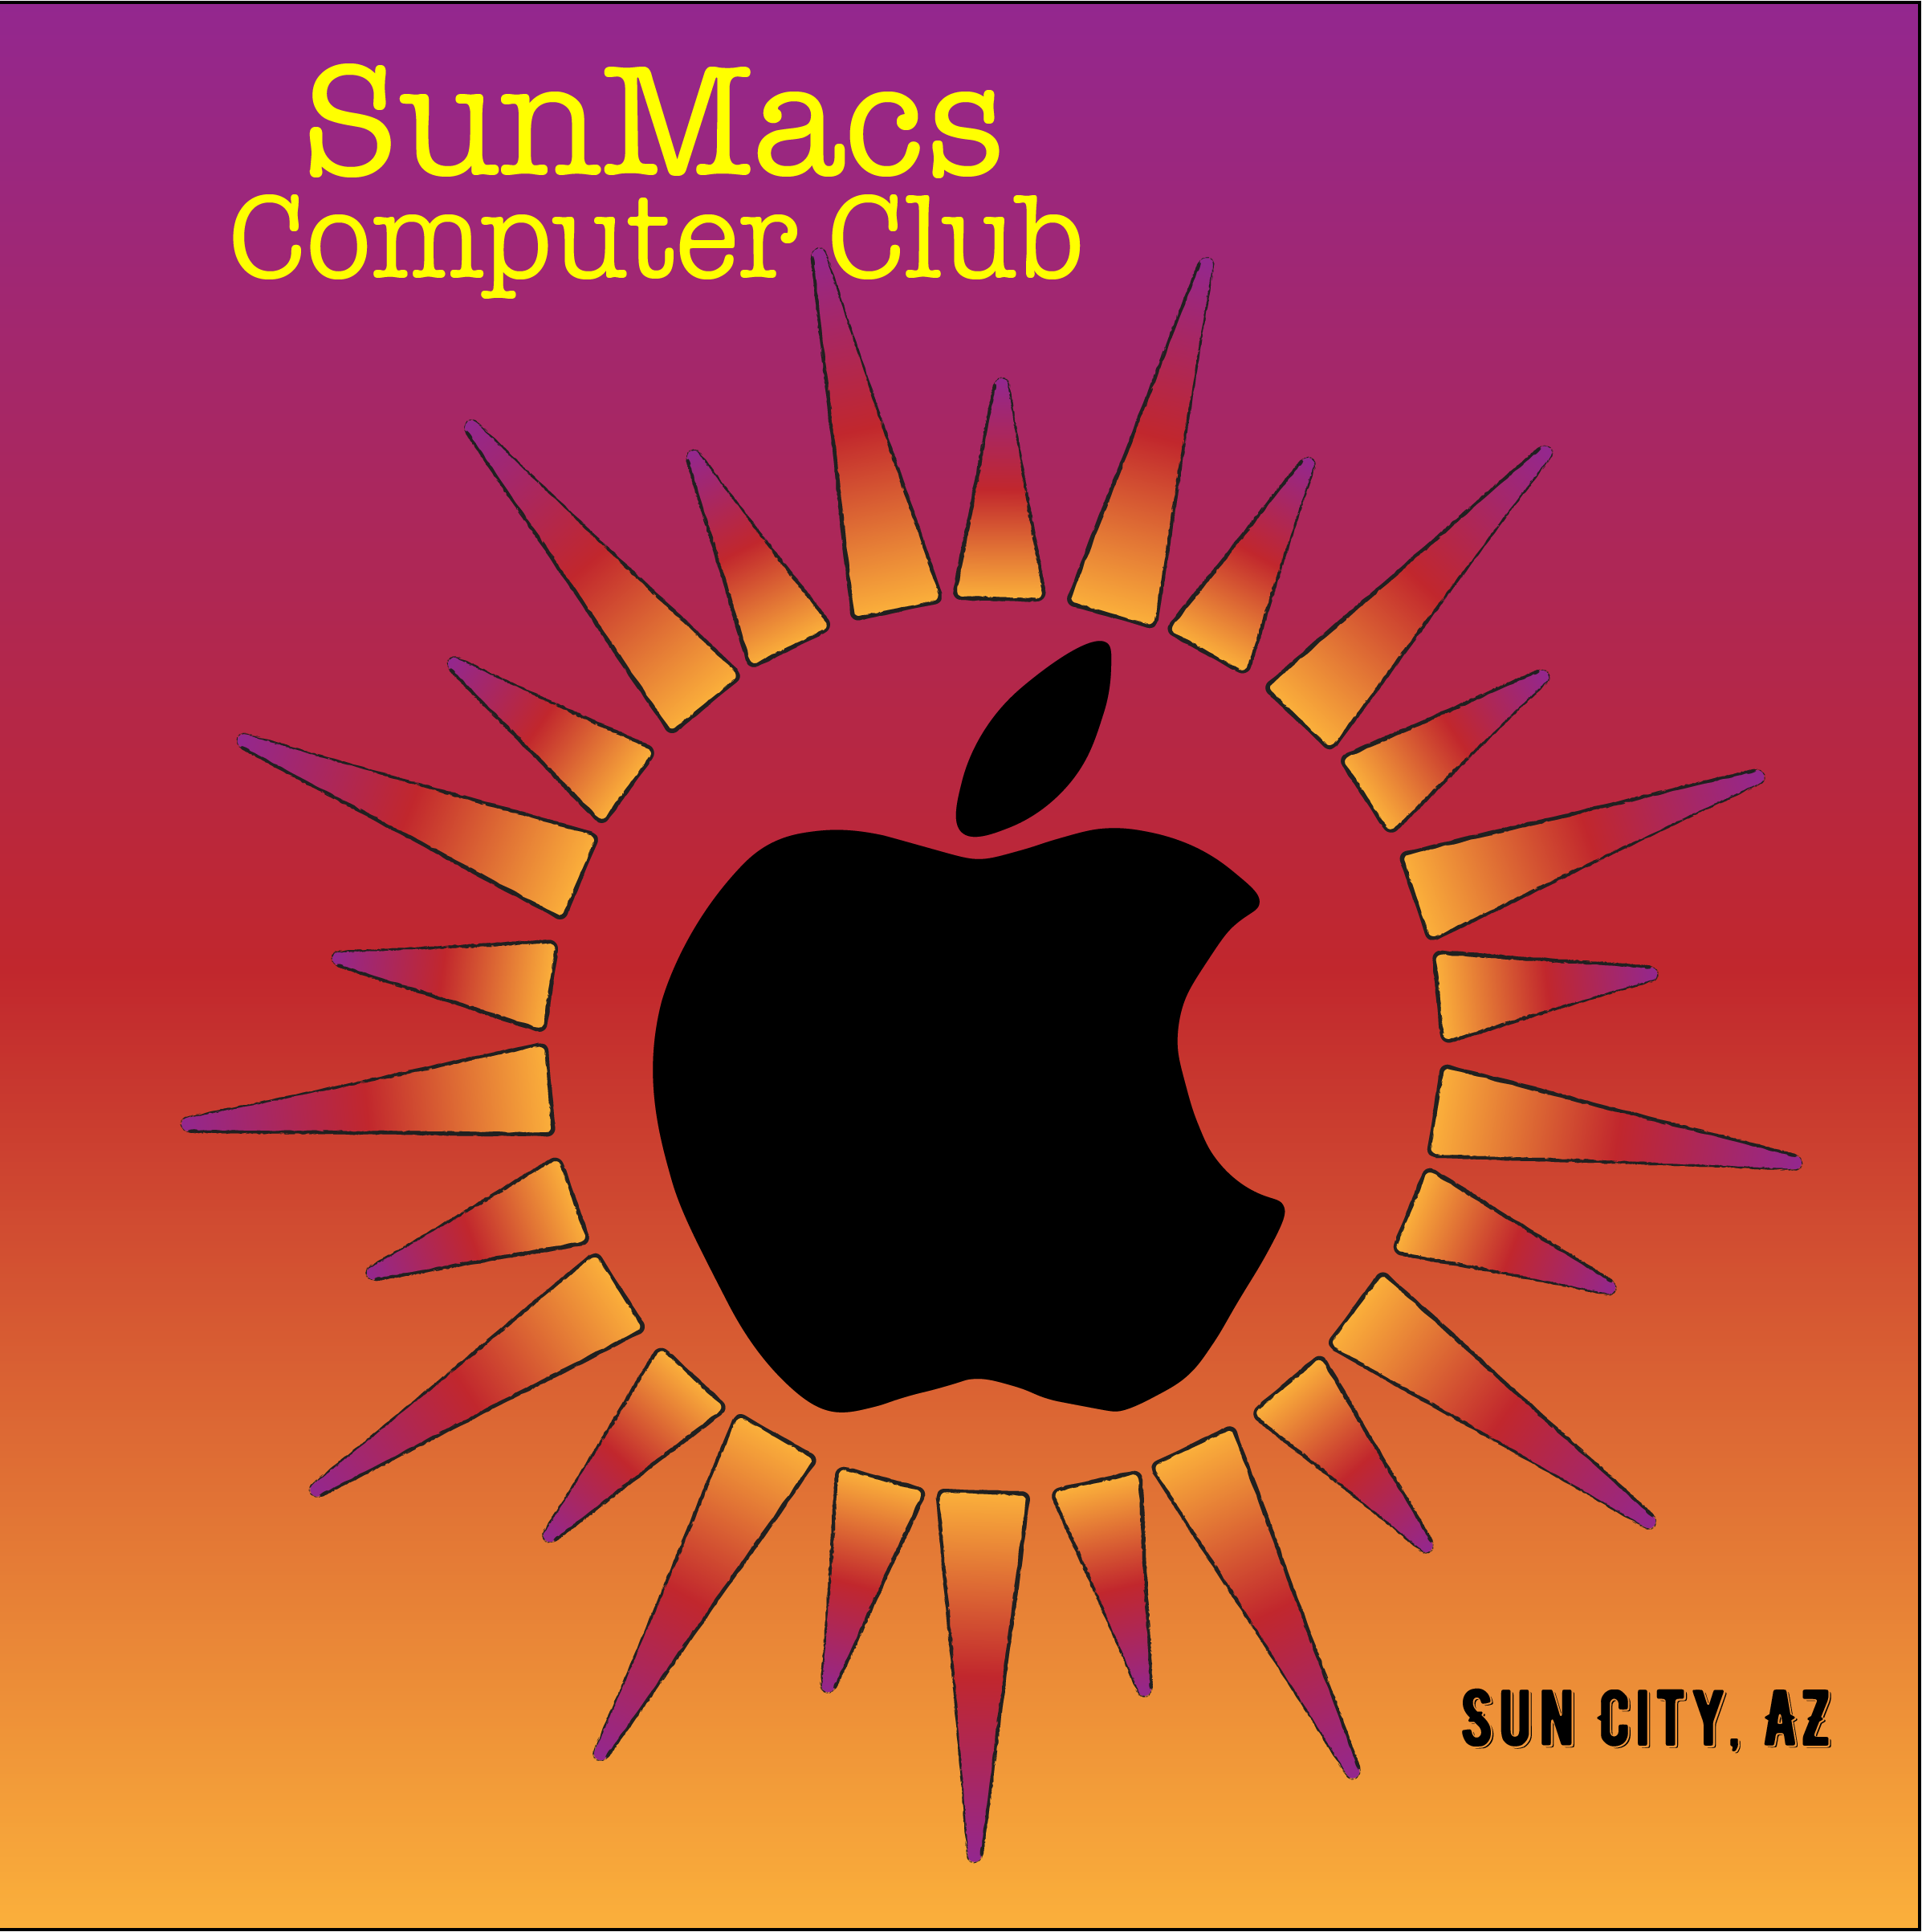 Sun Macs Computer Club